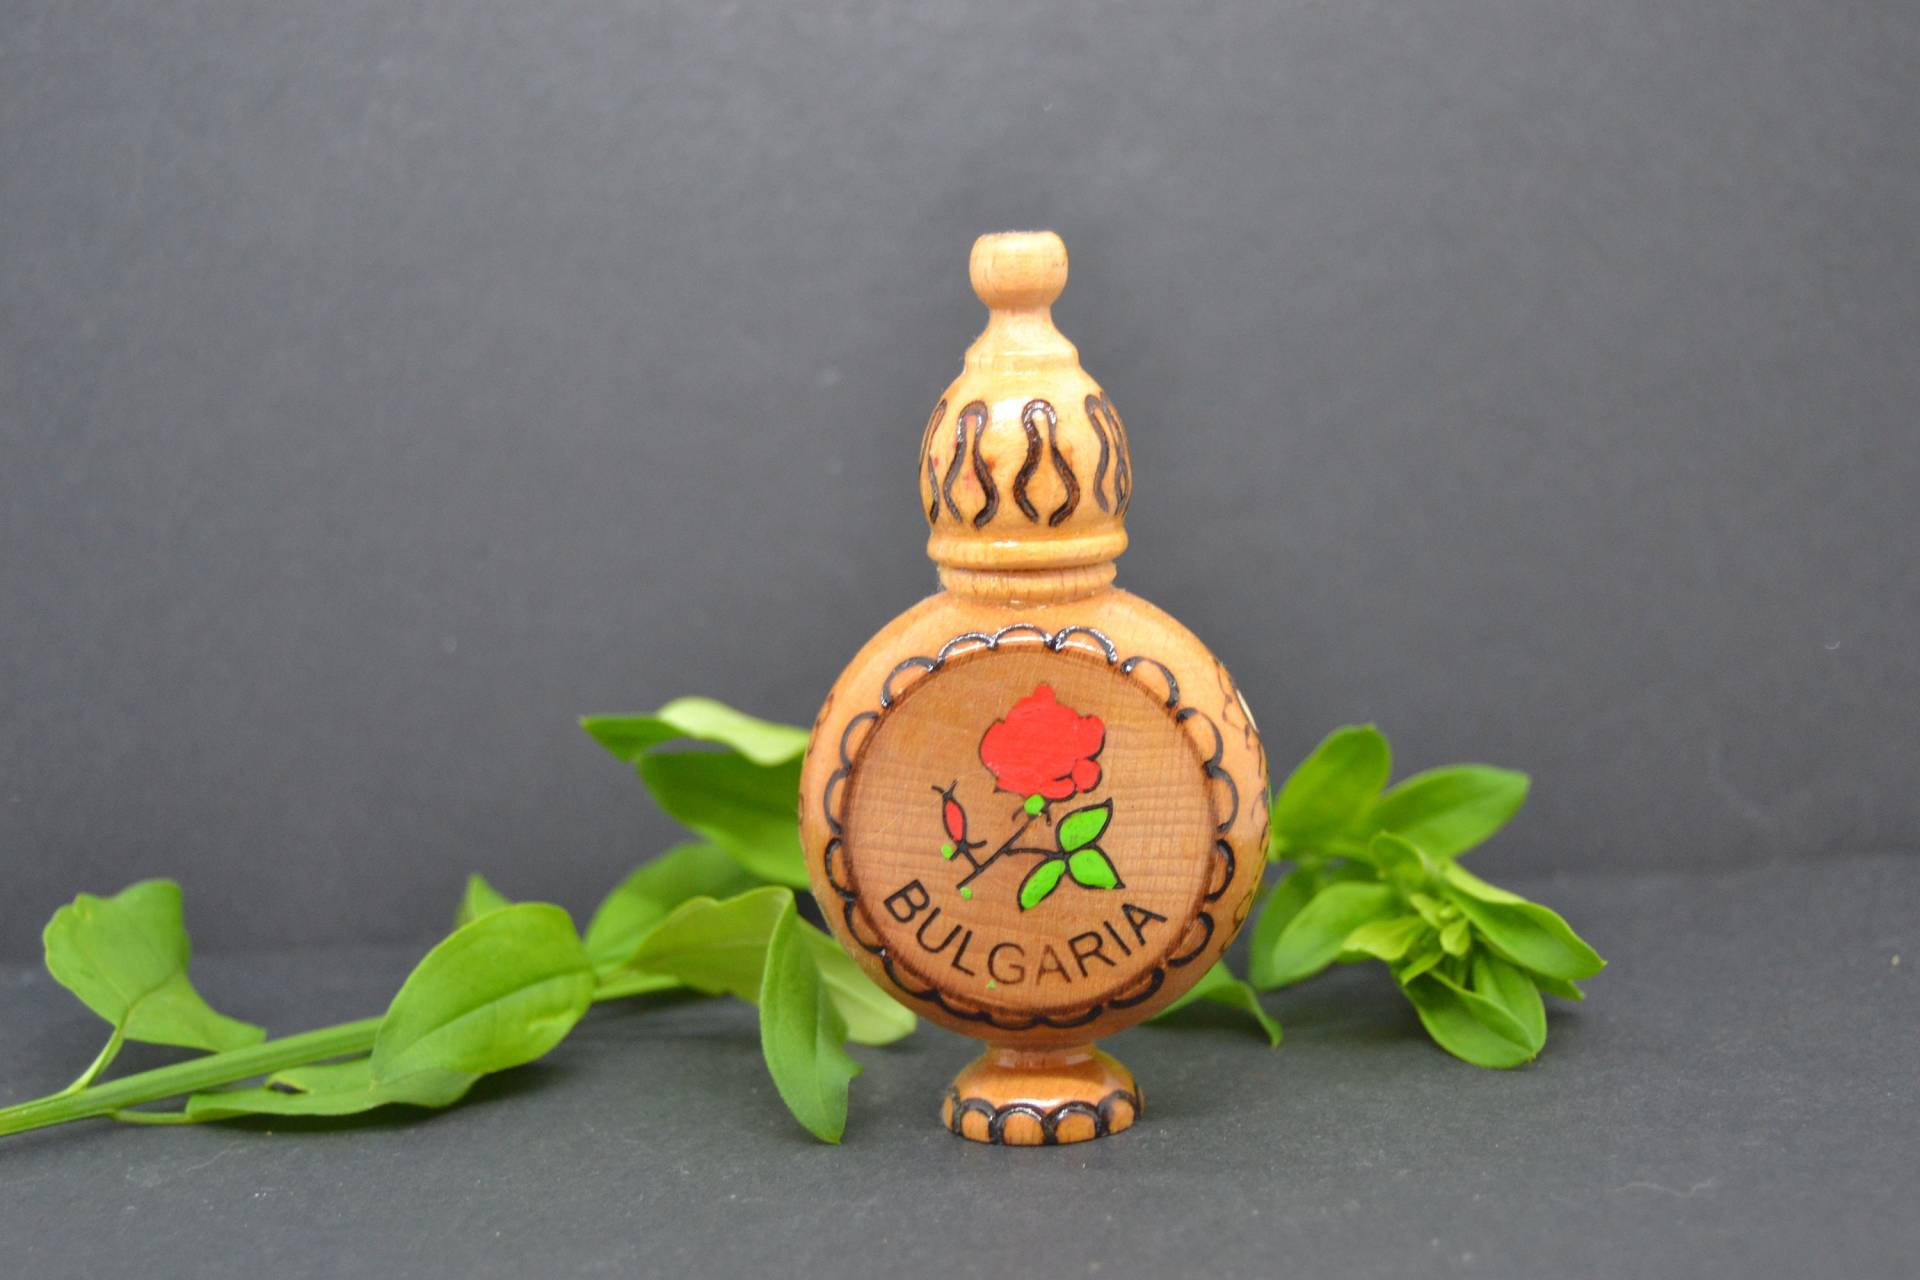 Rosenparfüm, Bulgarien Souvenir, Mini-Parfüm, Sammlerstück, Parfümsammlung, Souvenirsammlung, Geschenk Für Mama von VintageTesorosDiseno